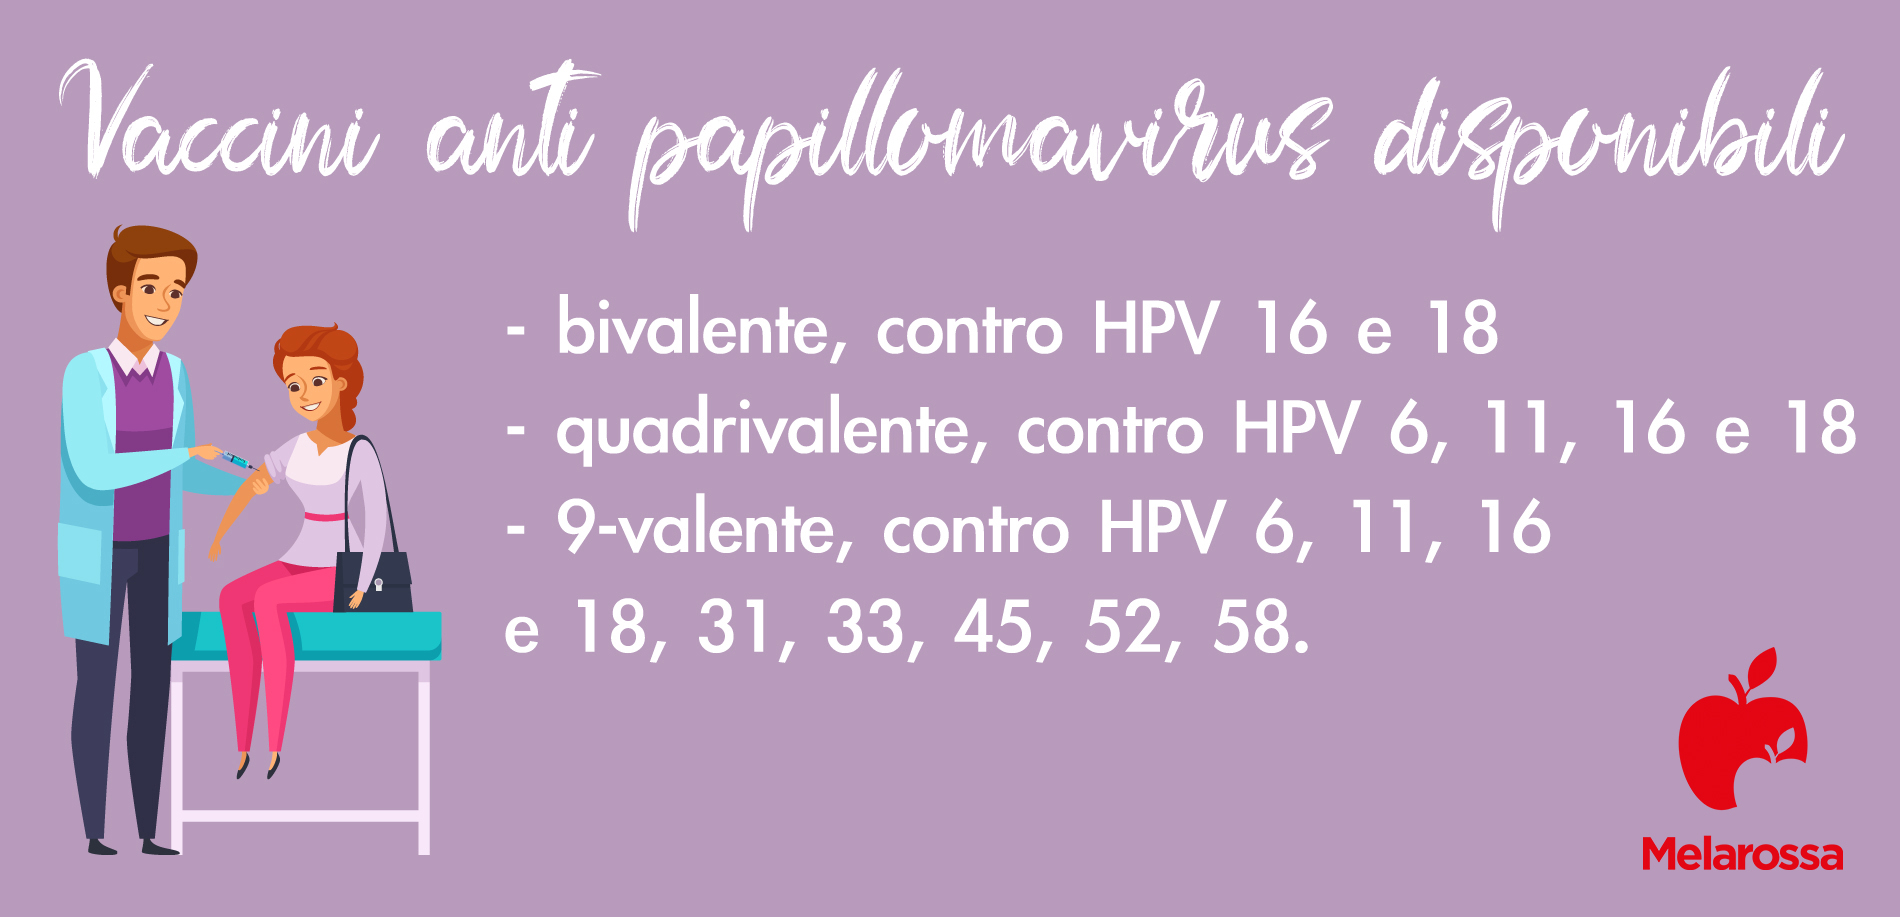 MST, papilloma virus vaccini